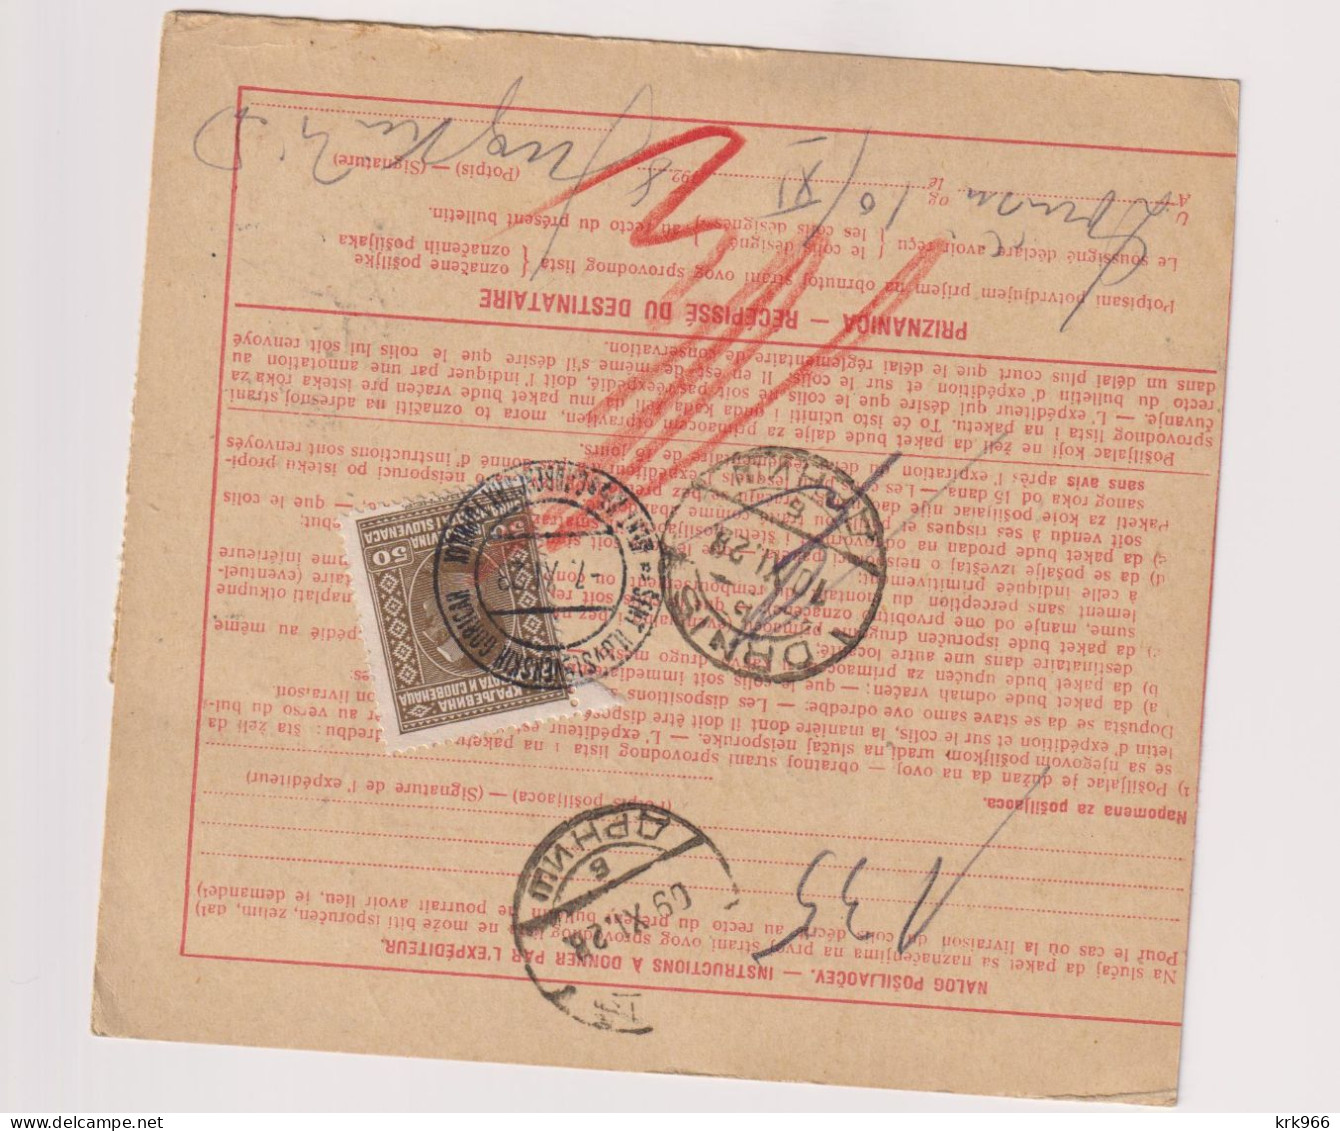 YUGOSLAVIA, SENT ILJ V SLOV: GOR:  1928  Parcel Card - Lettres & Documents